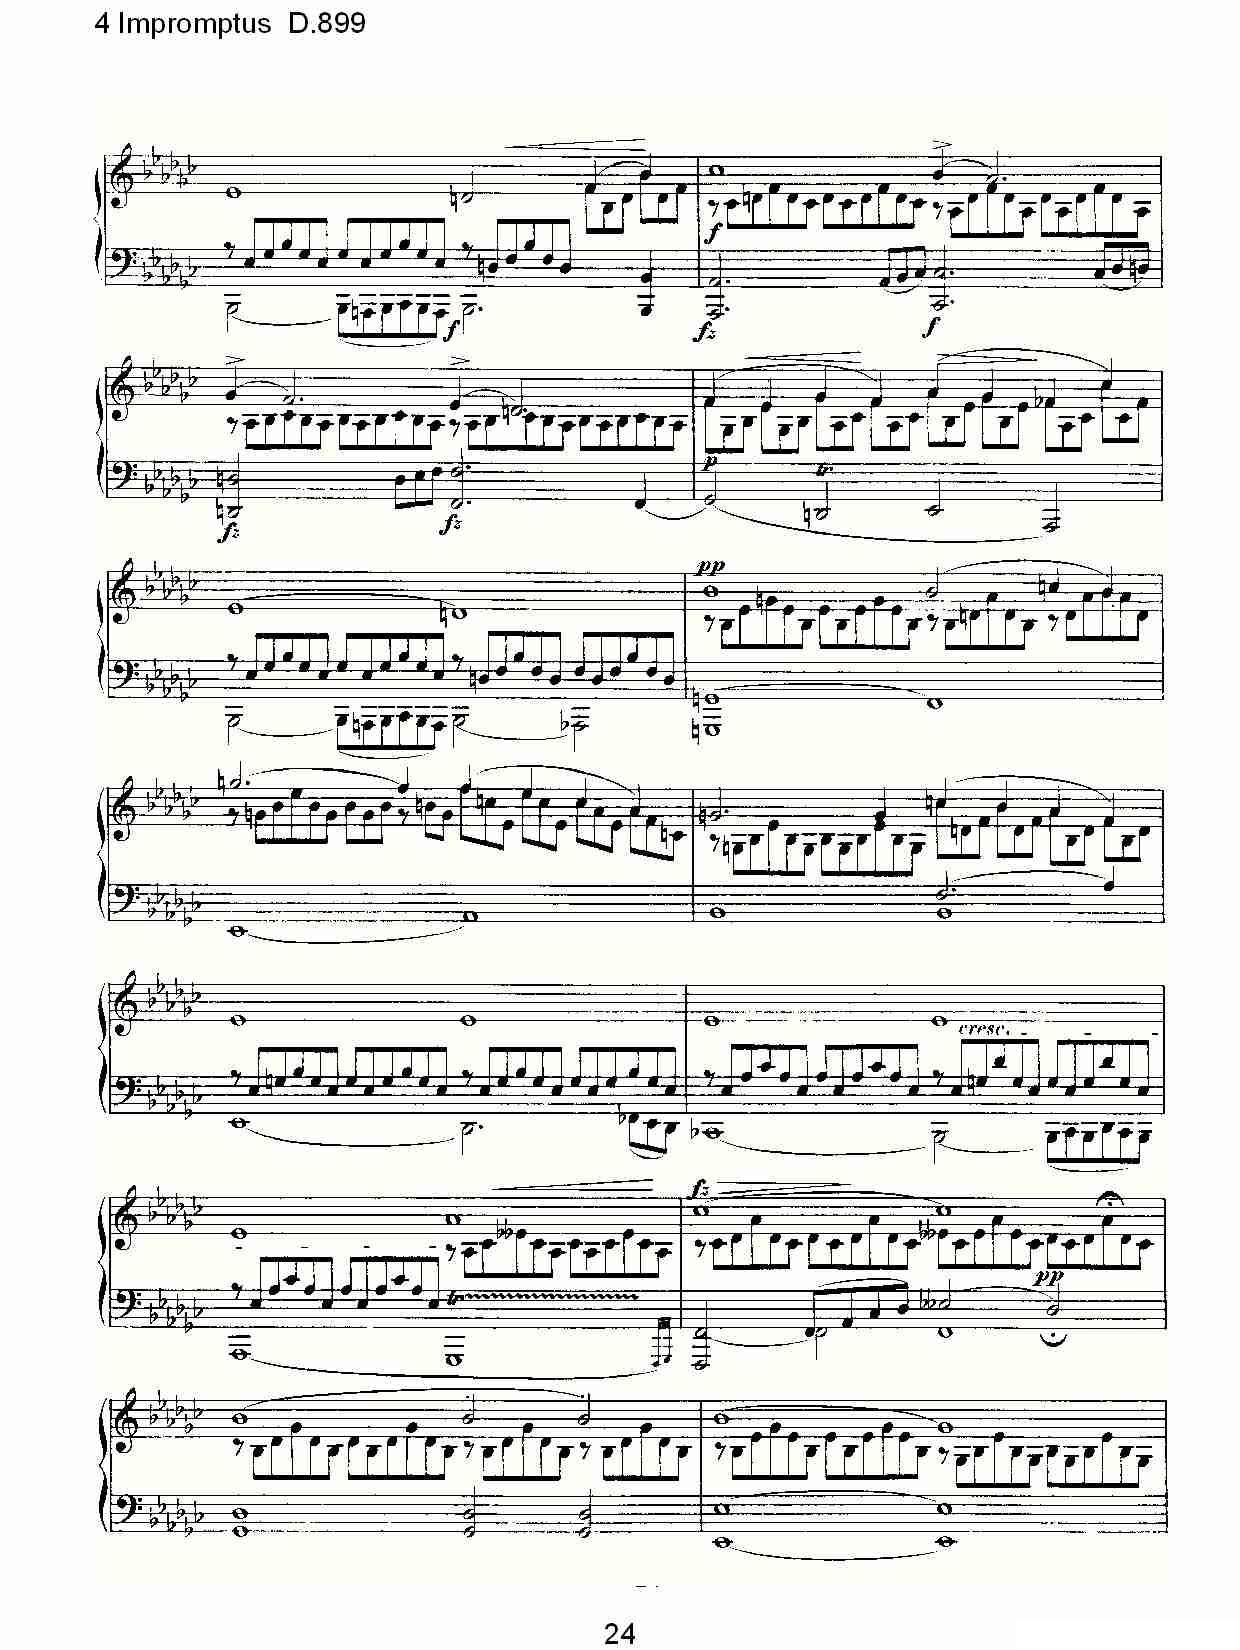 4 Impromptus D.899（4人即兴演奏 D.899）钢琴曲谱（图24）